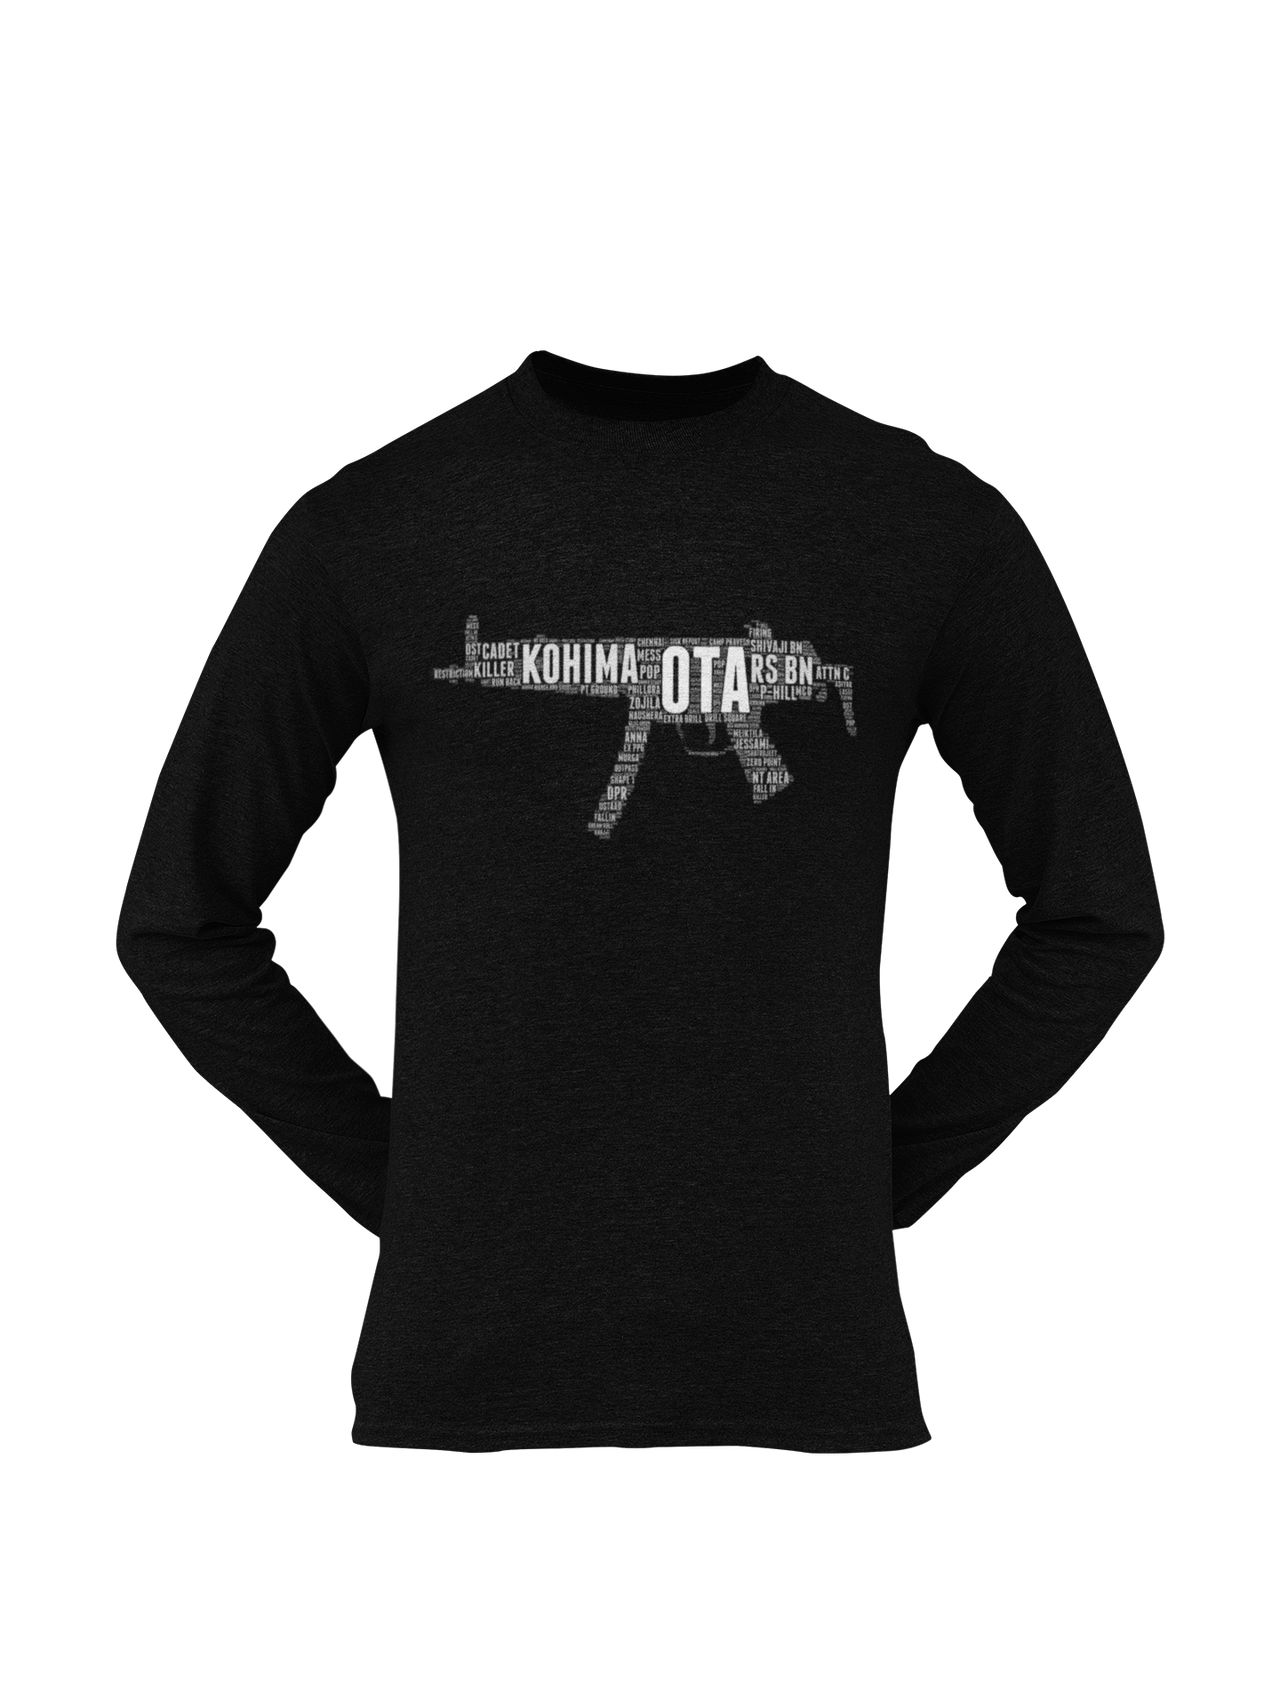 OTA T-shirt - Word Cloud Kohima - MP5 (Men)